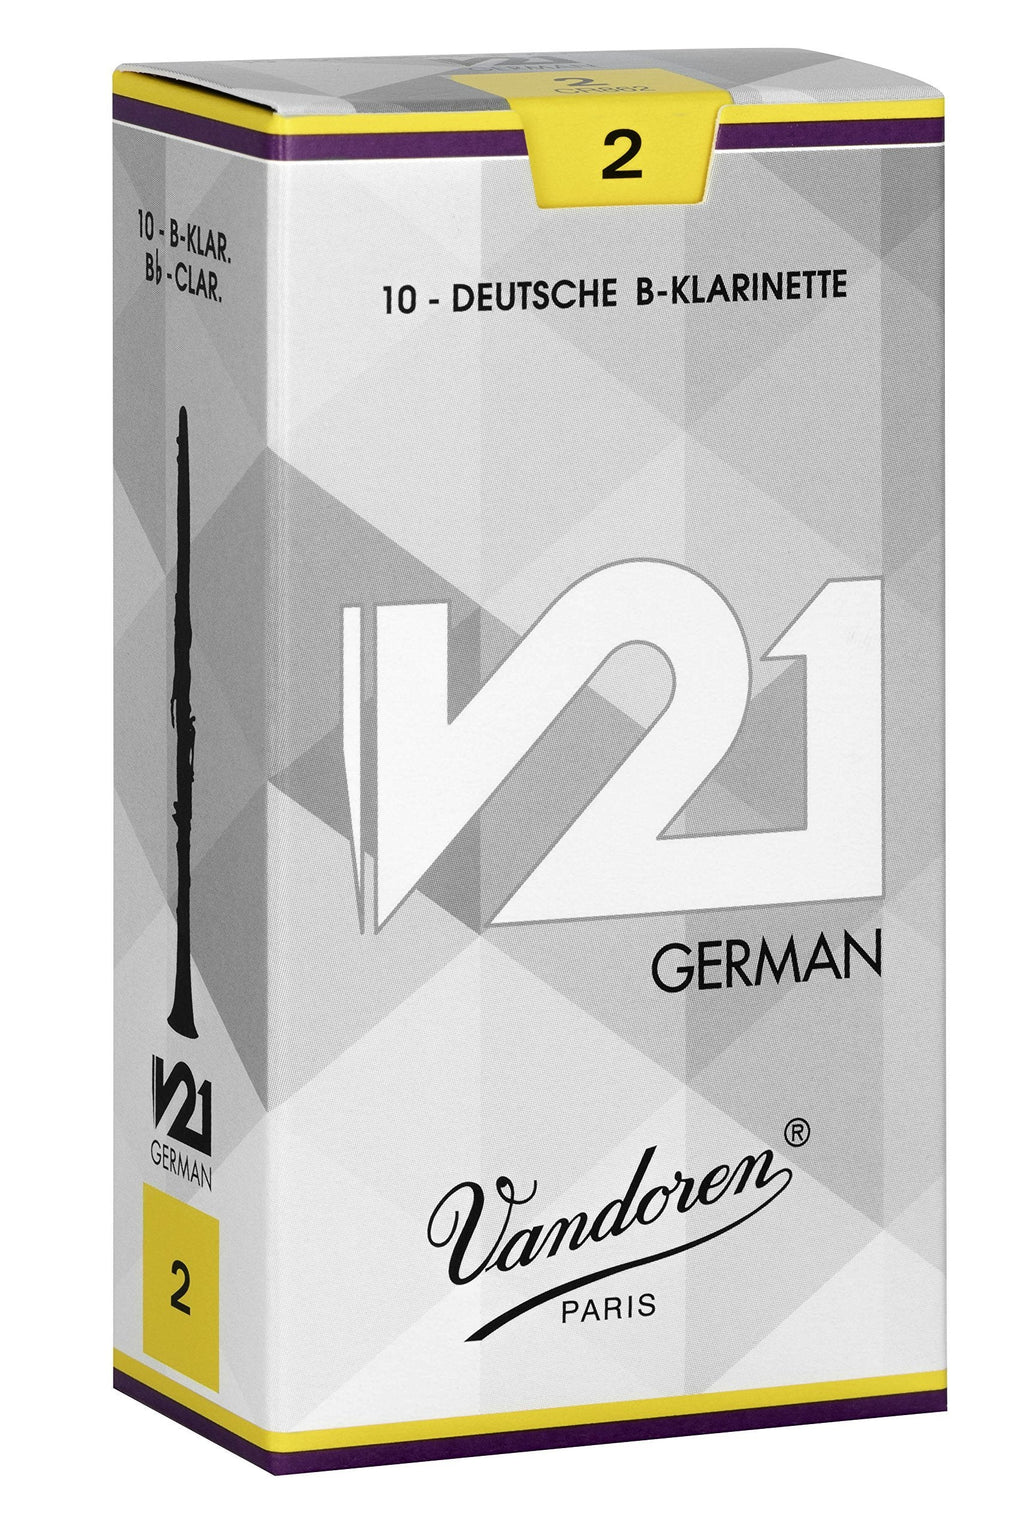 Vandoren CR862 V21 German Clarinet 2 Strength Reeds, 10 units,